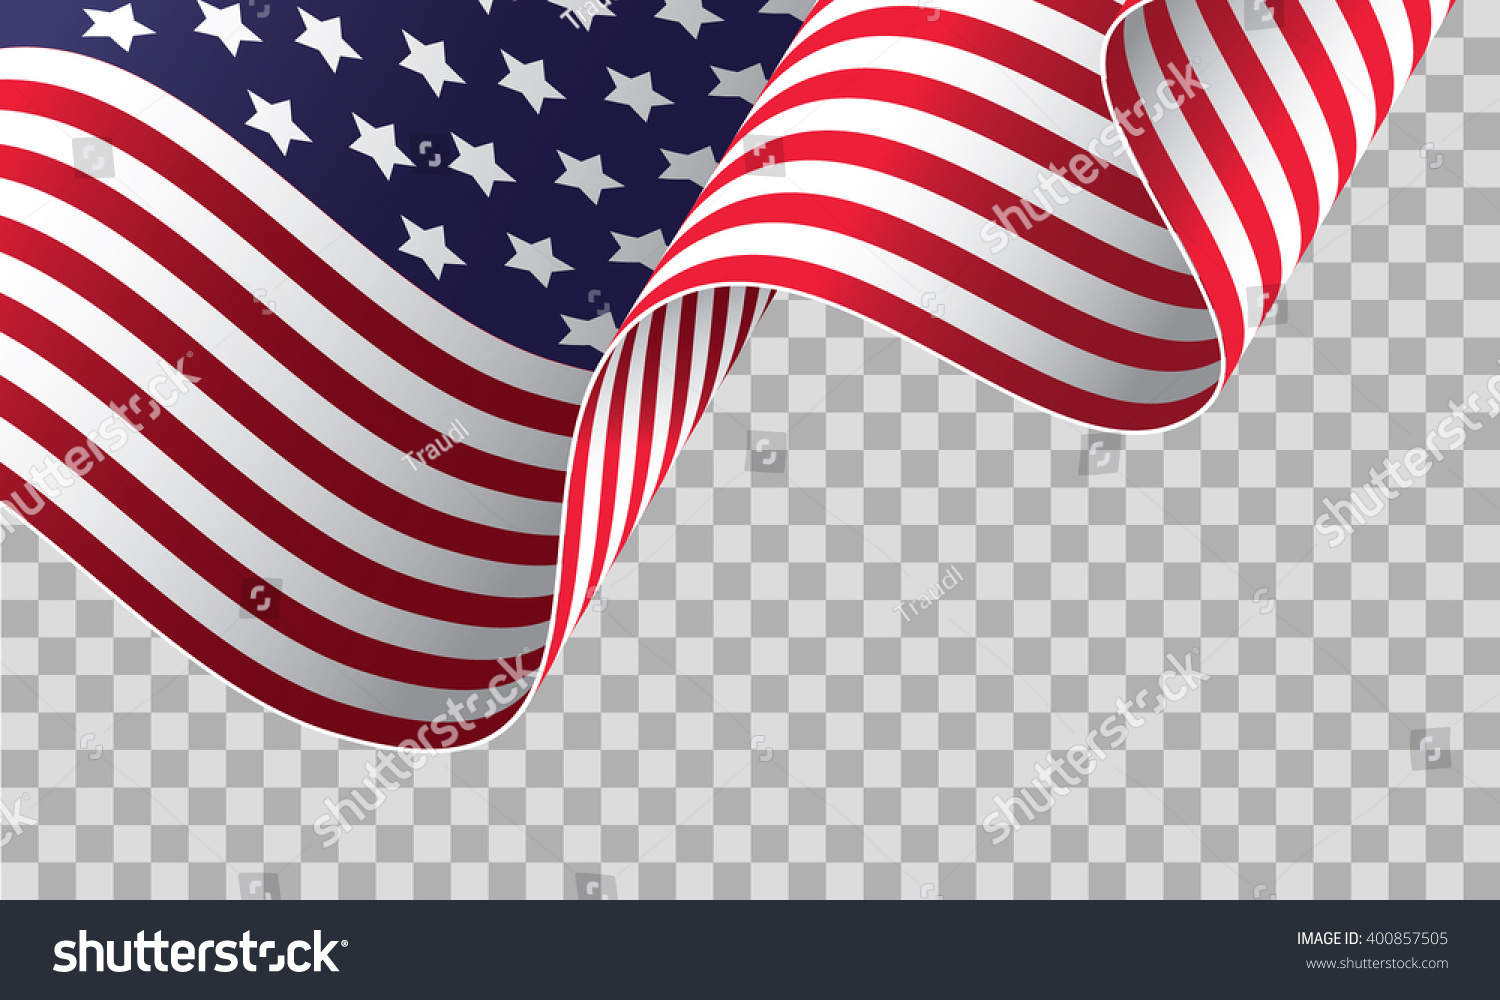 American flag on transparent background - vector illustration #400857505